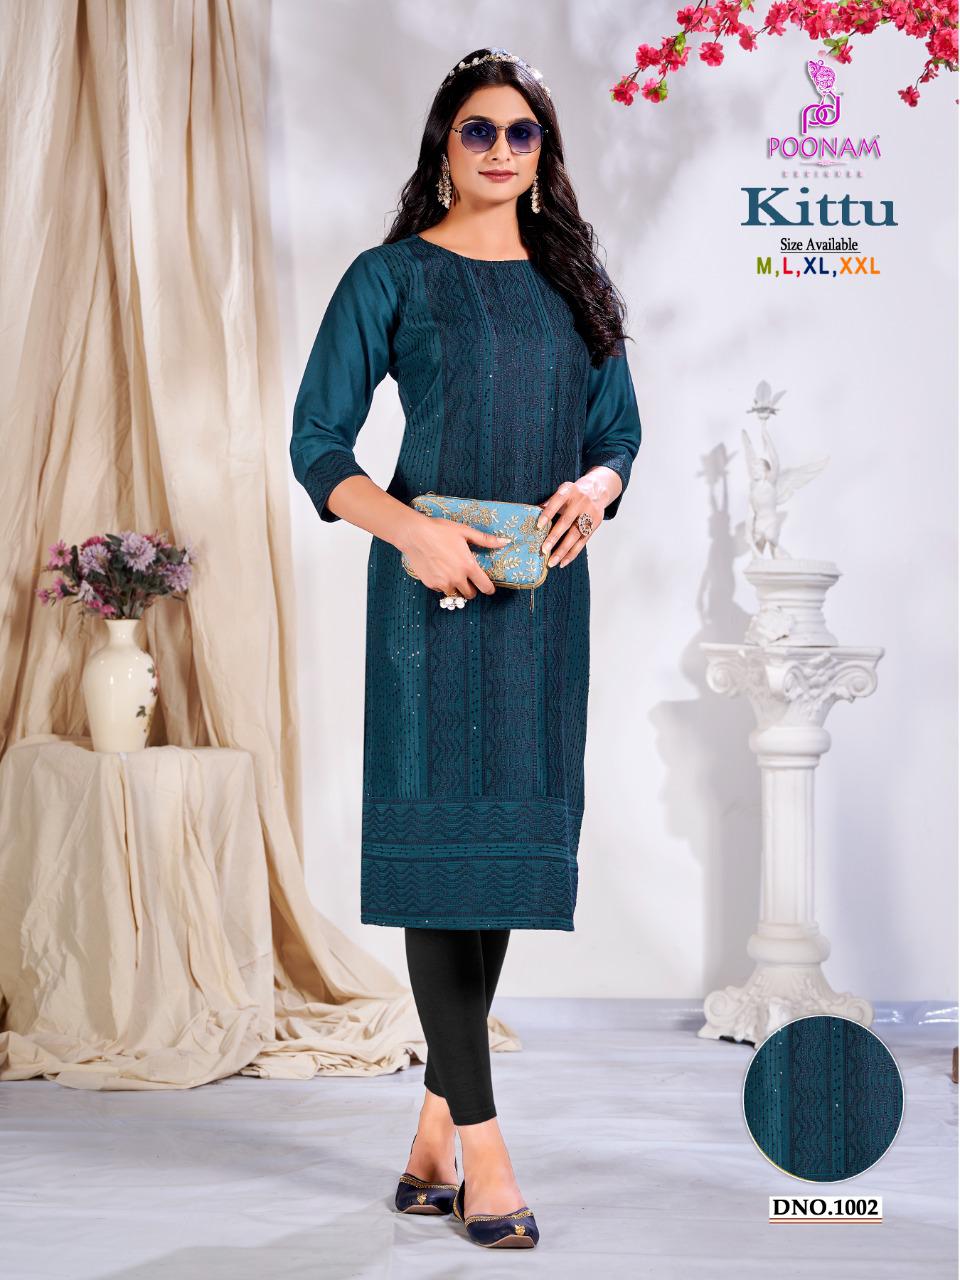 Poonam Kittu Fancy Designer Kurti Collection collection 2